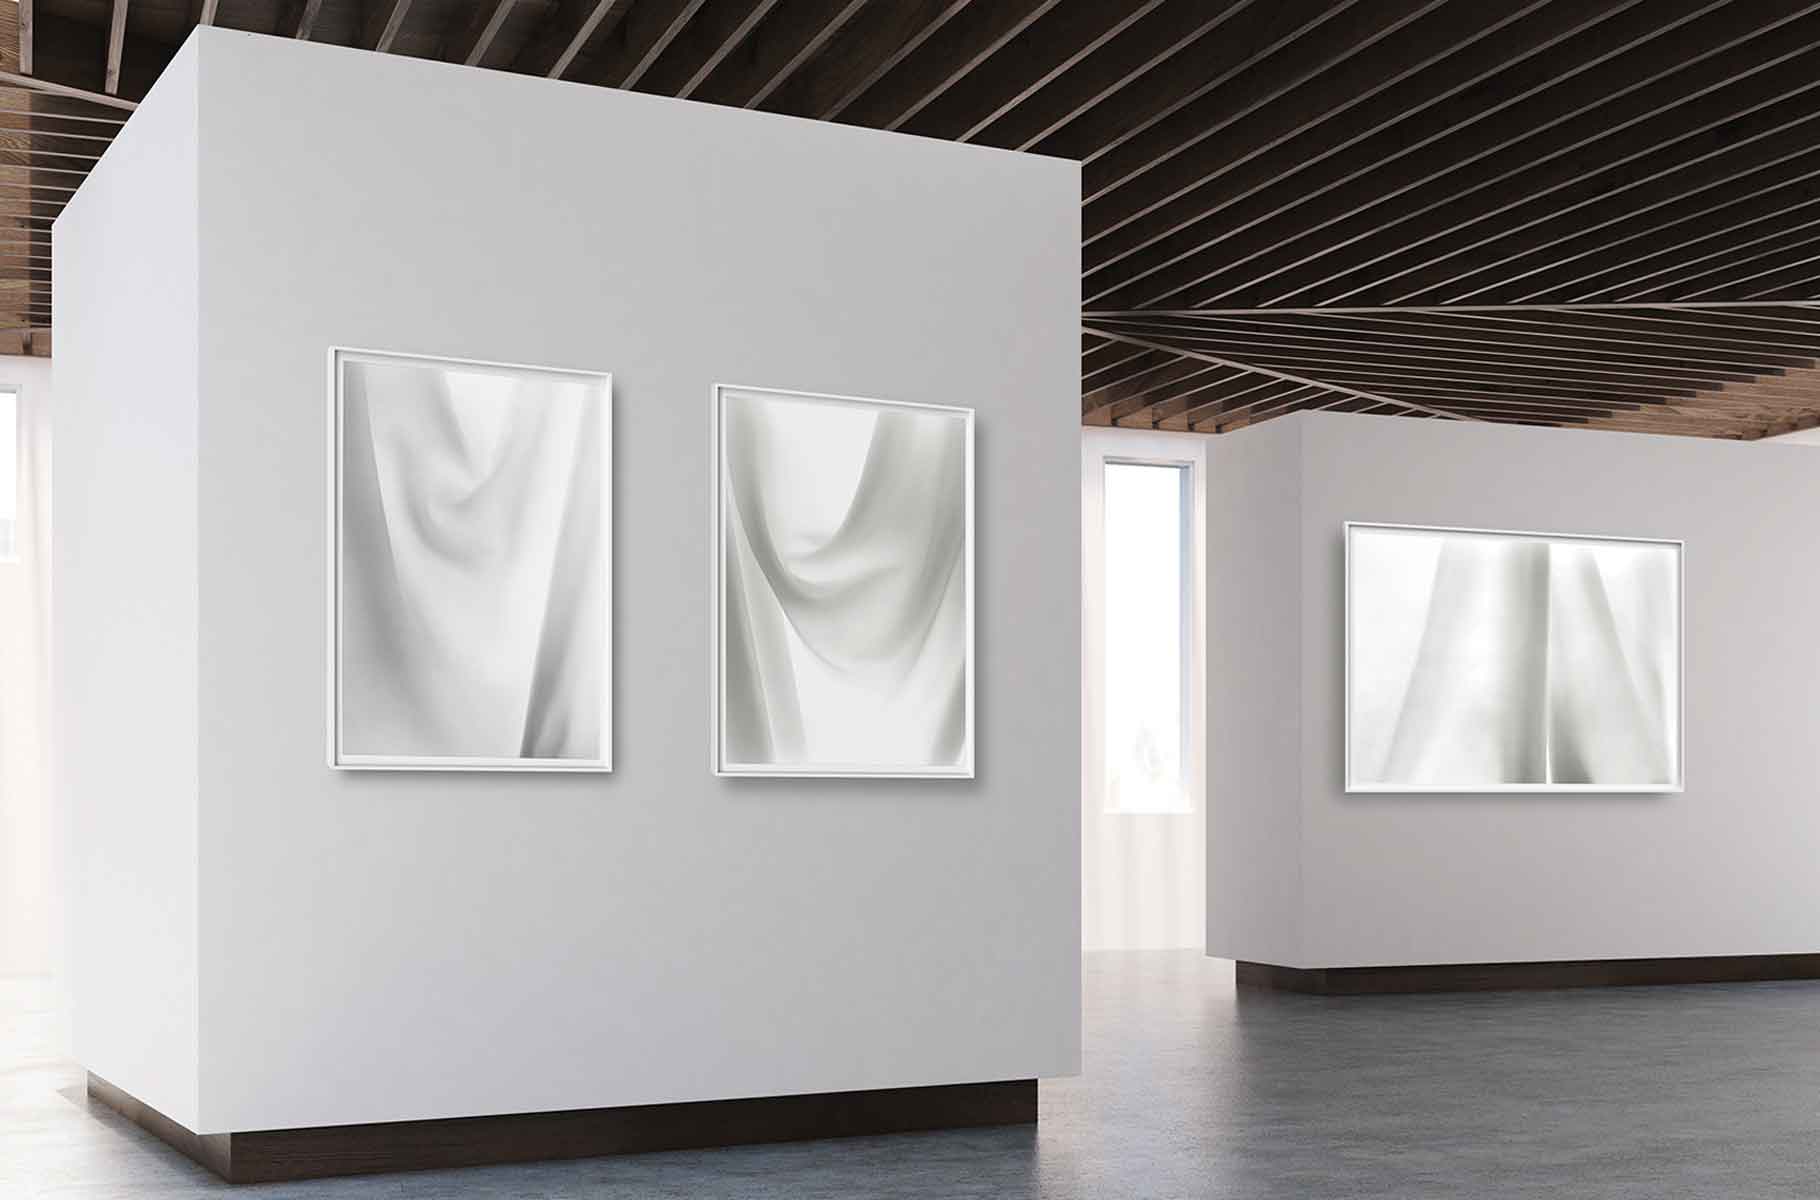 passage gallery installation